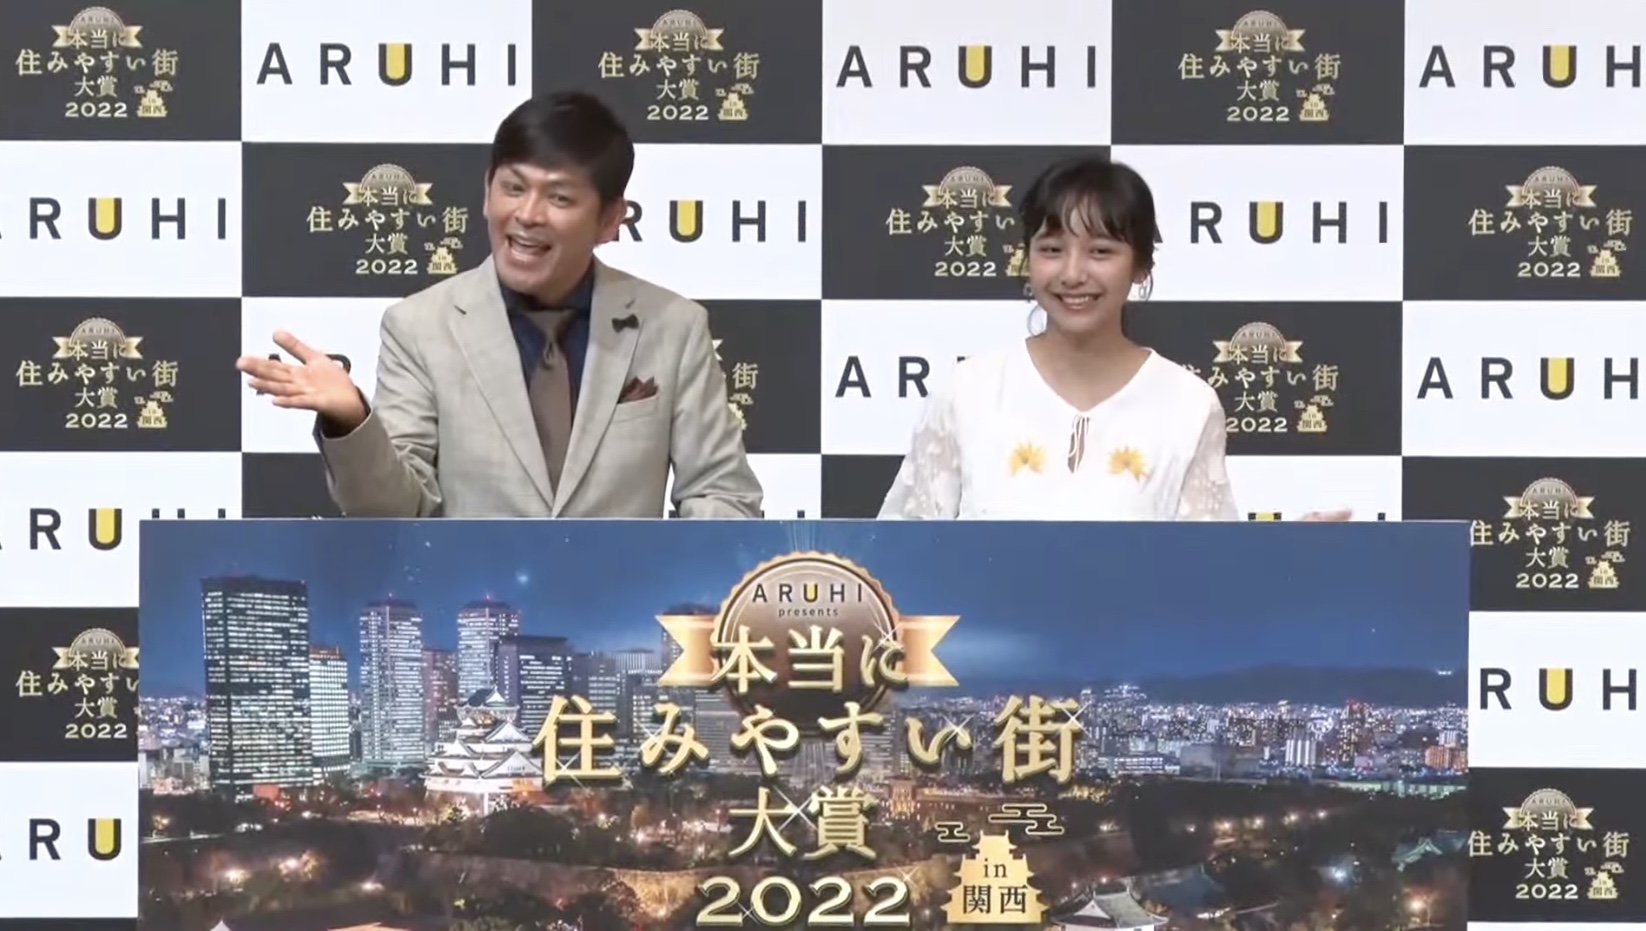 「ARUHI presents 本当に住みやすい街大賞 2022 in 関西」にて岡田圭右と山之内すず